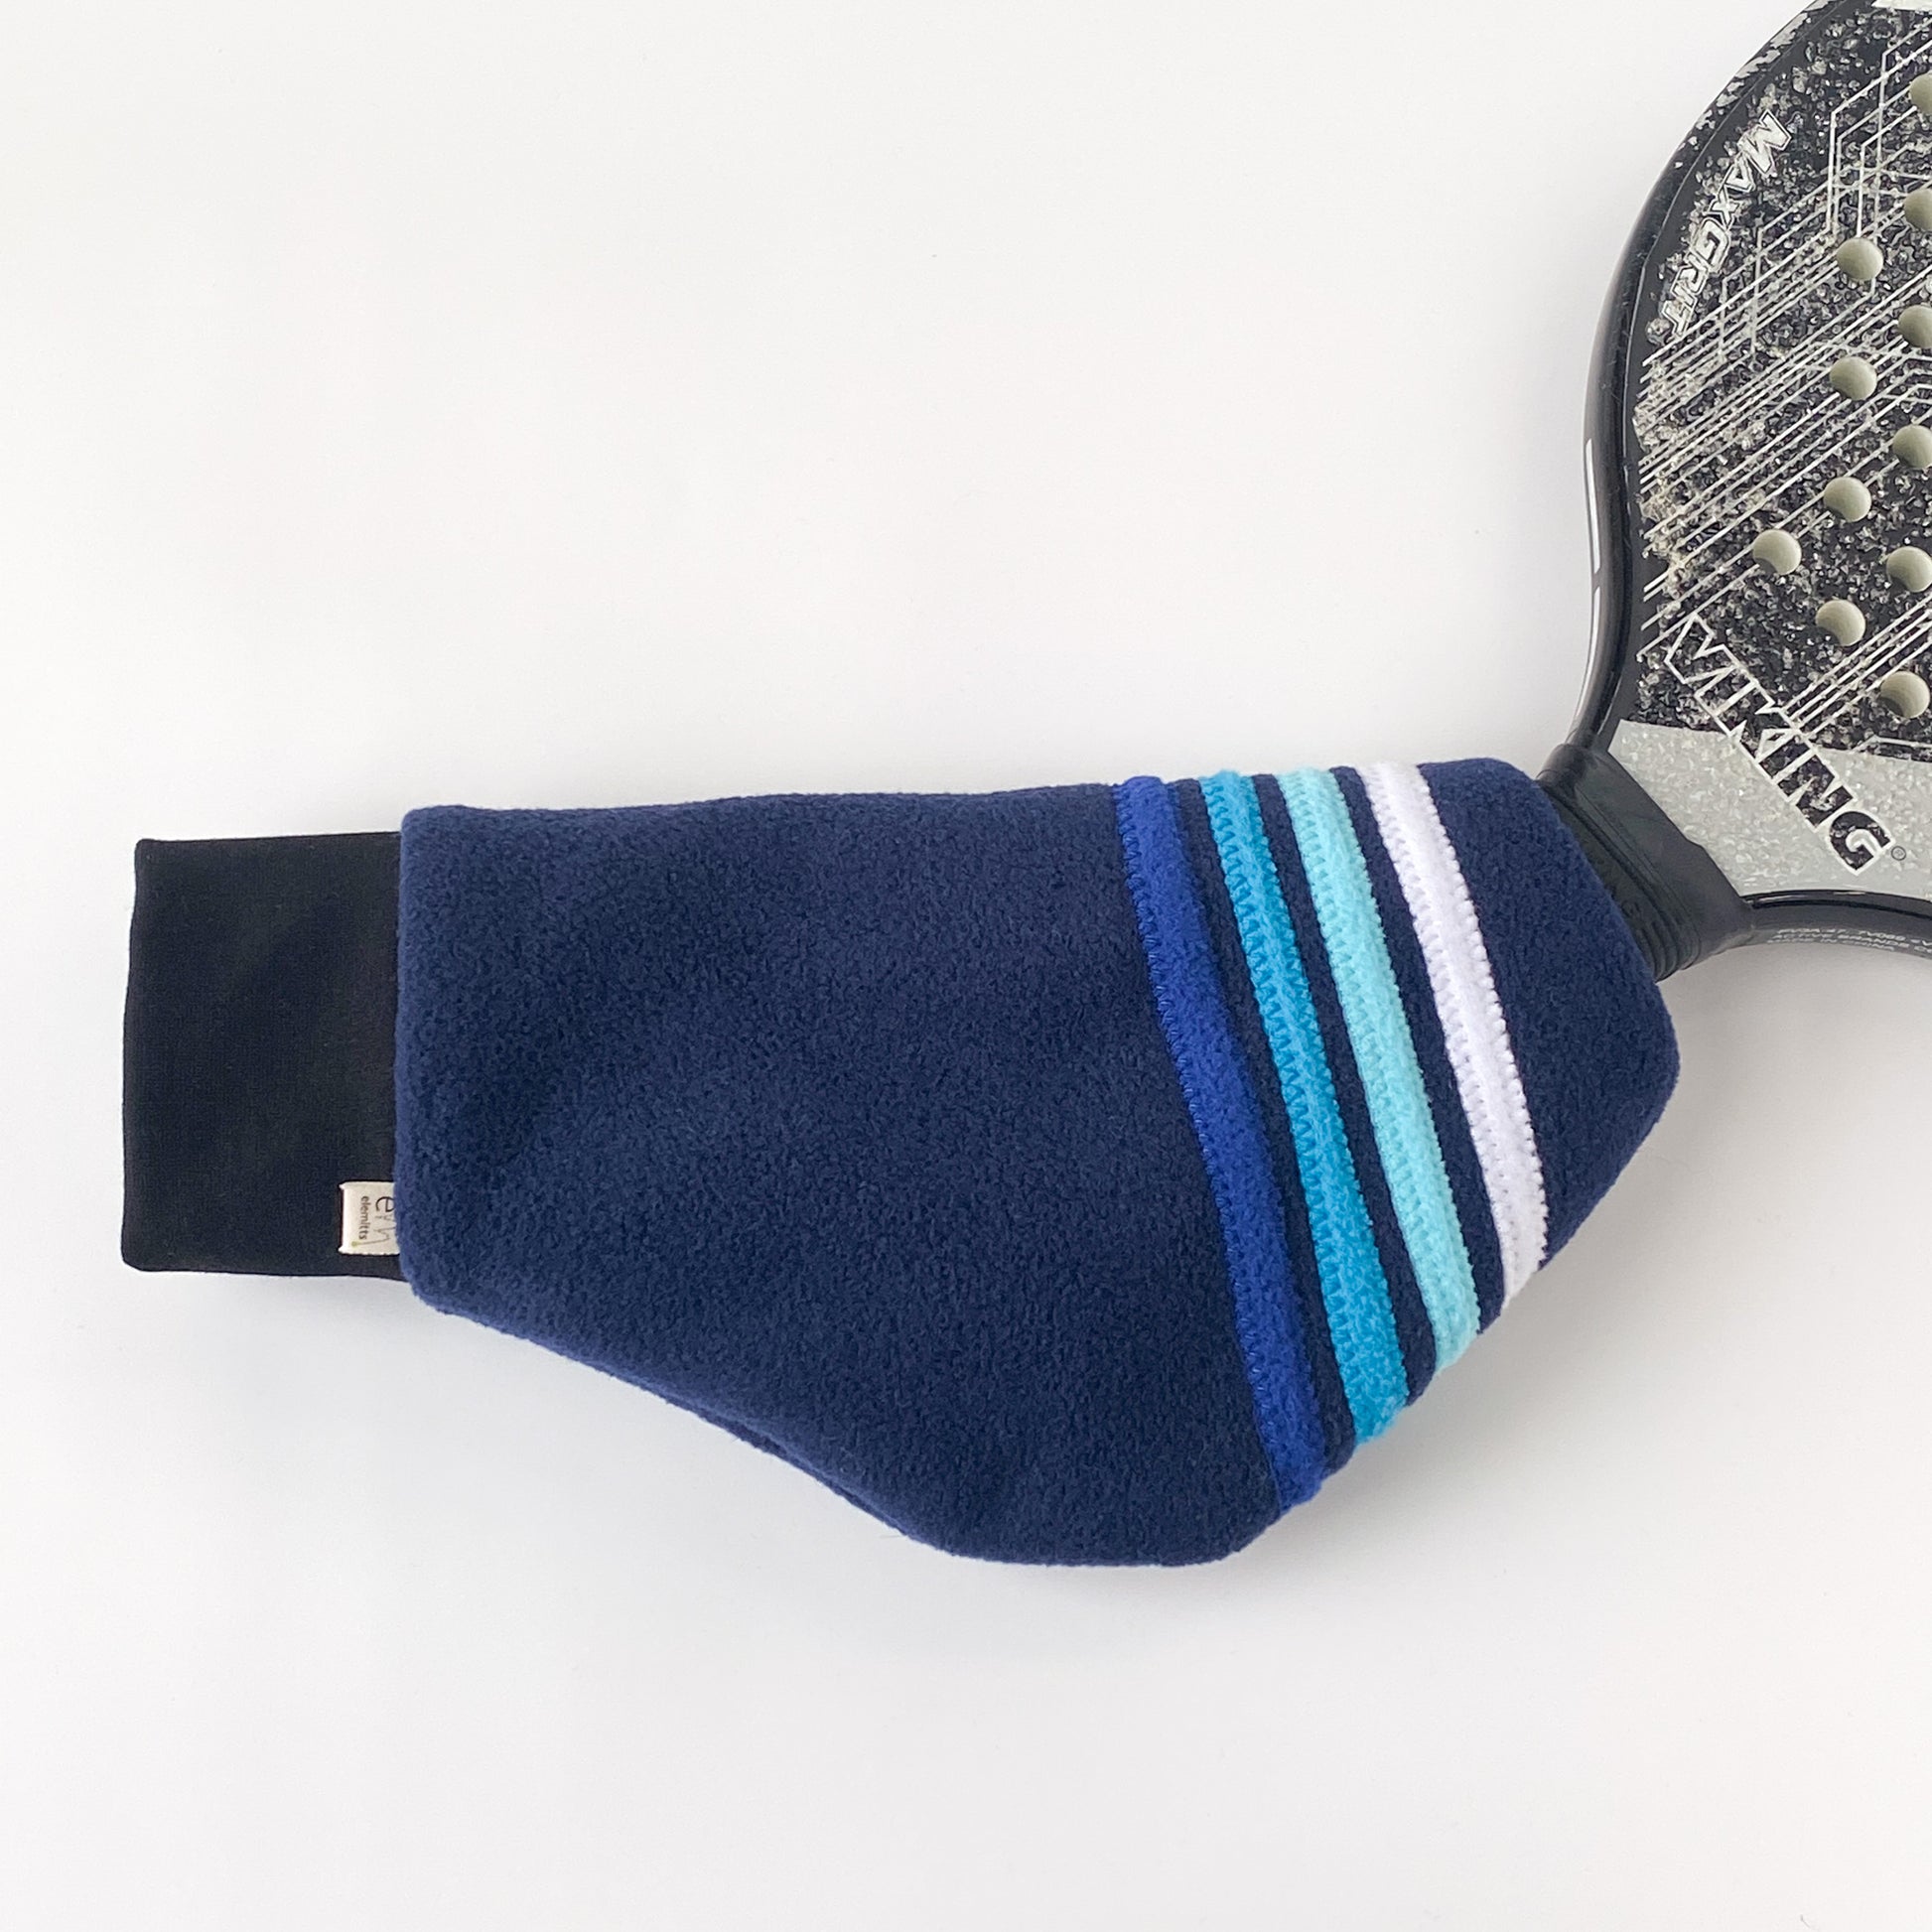 the snow & ice paddle tennis mitt. platform tennis mitt.  paddle tennis glove. platform tennis glove.